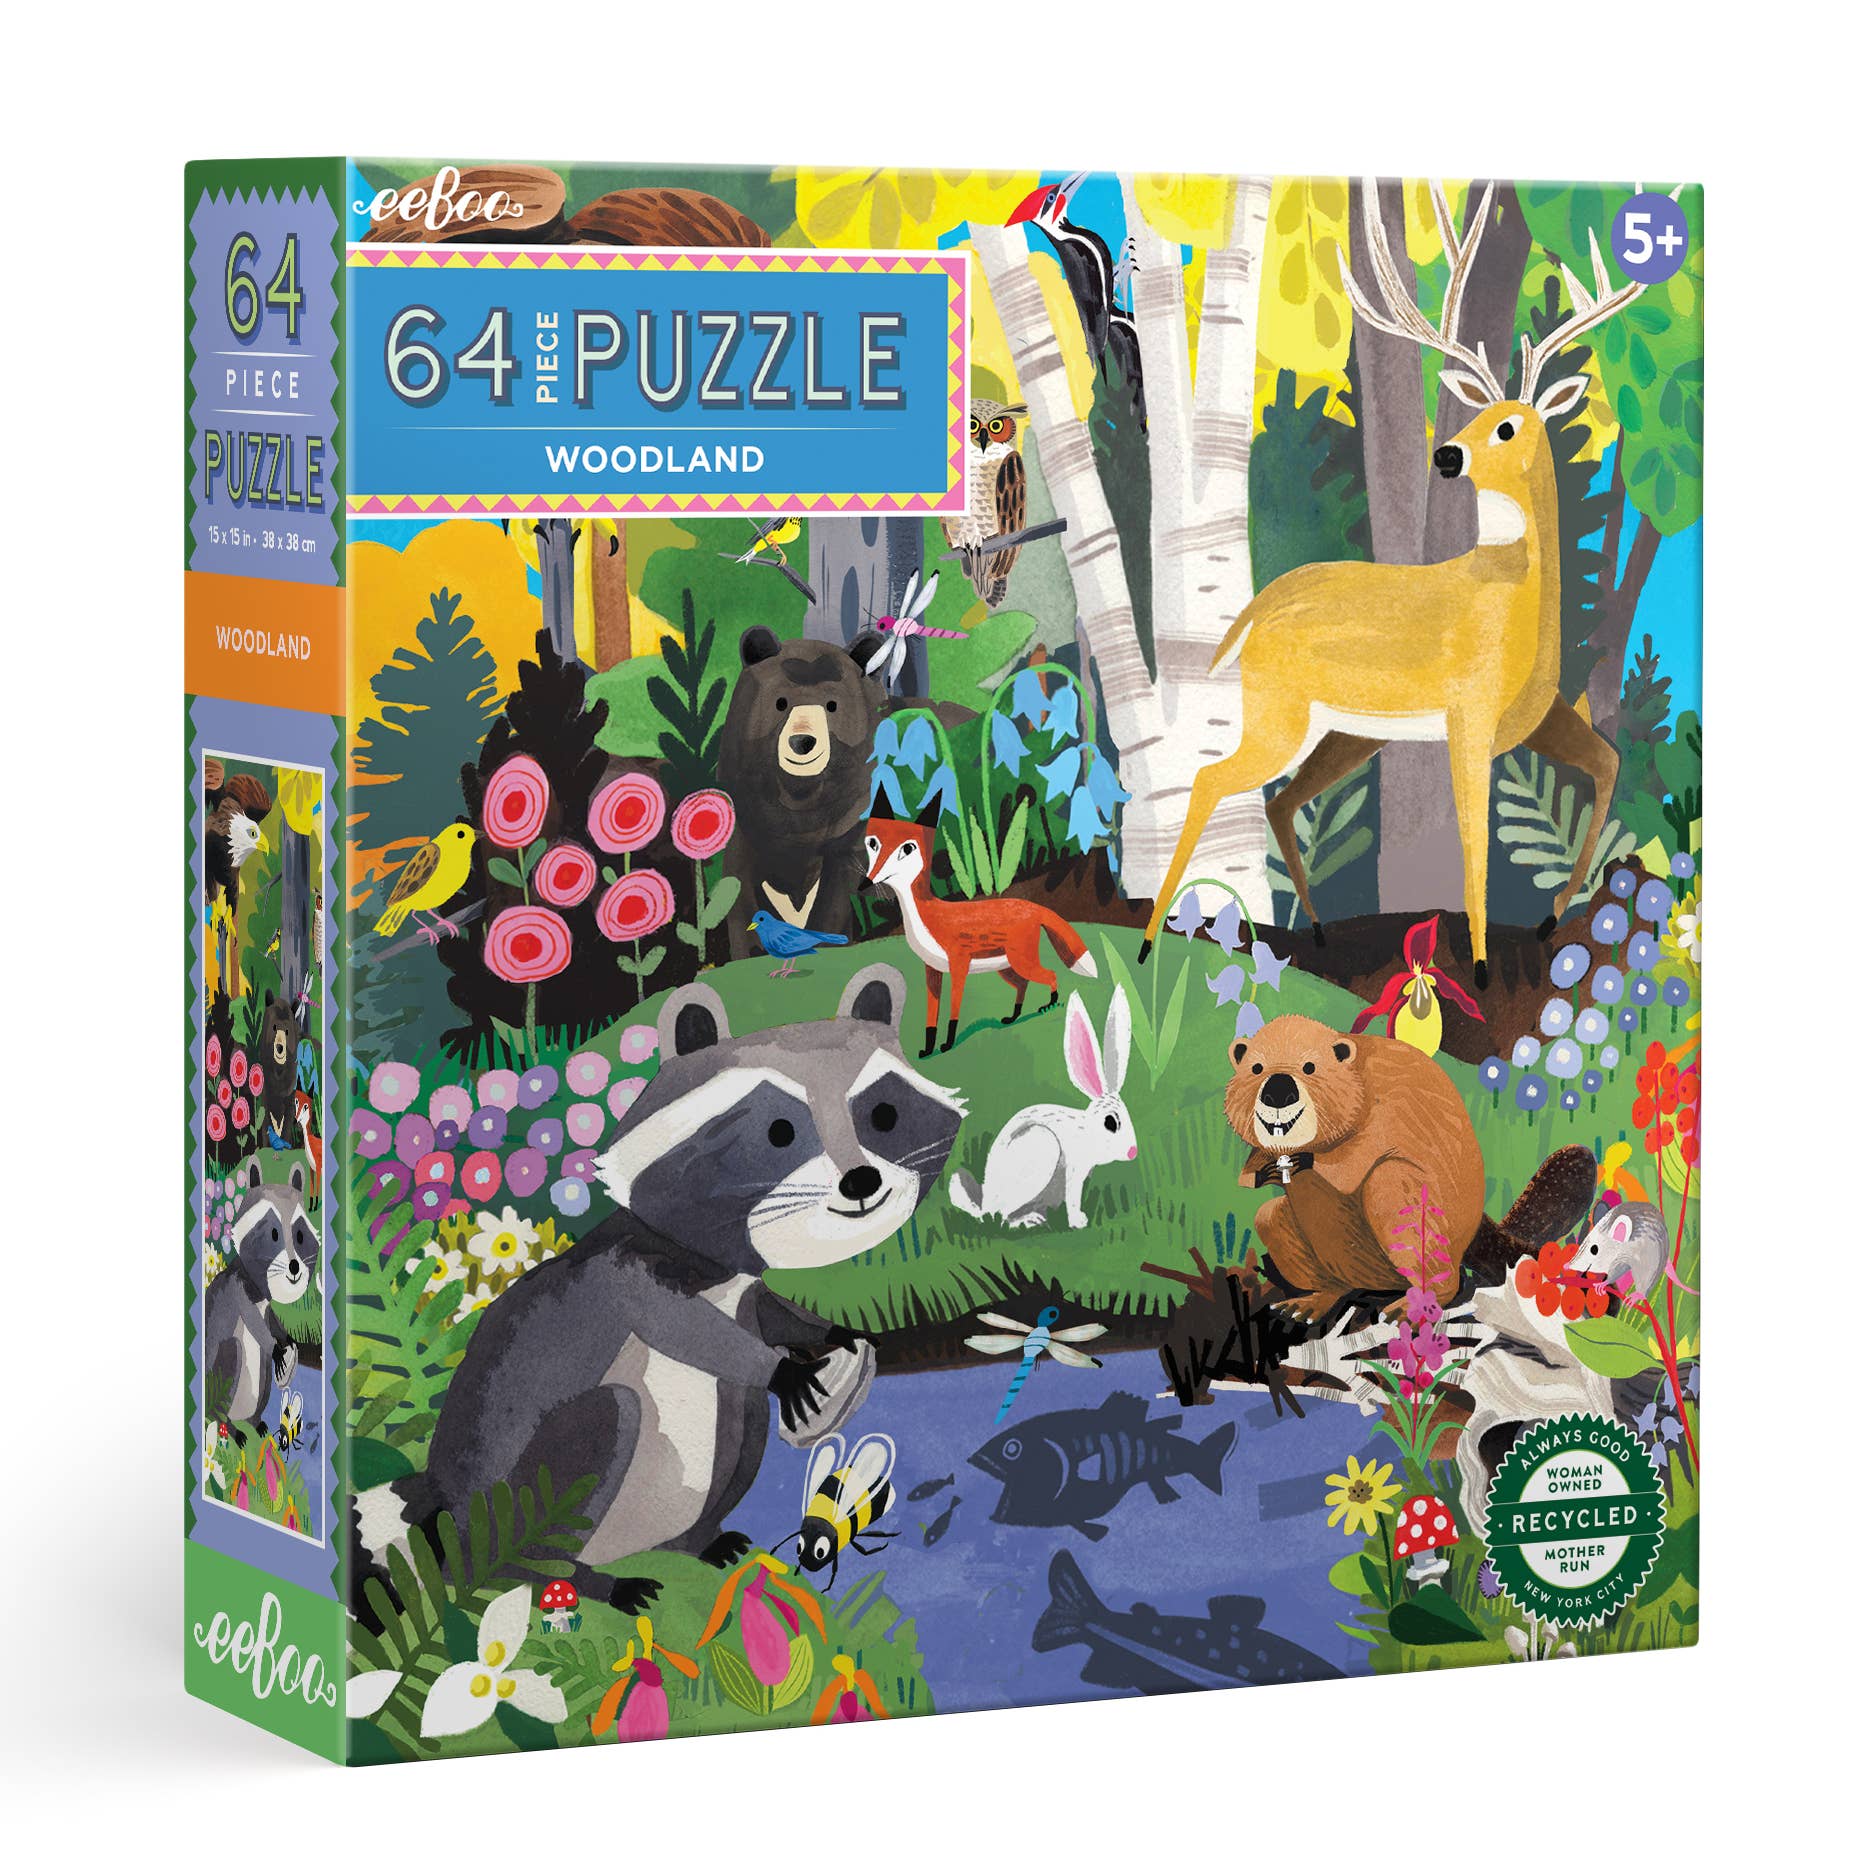 64 Piece Woodland Puzzle